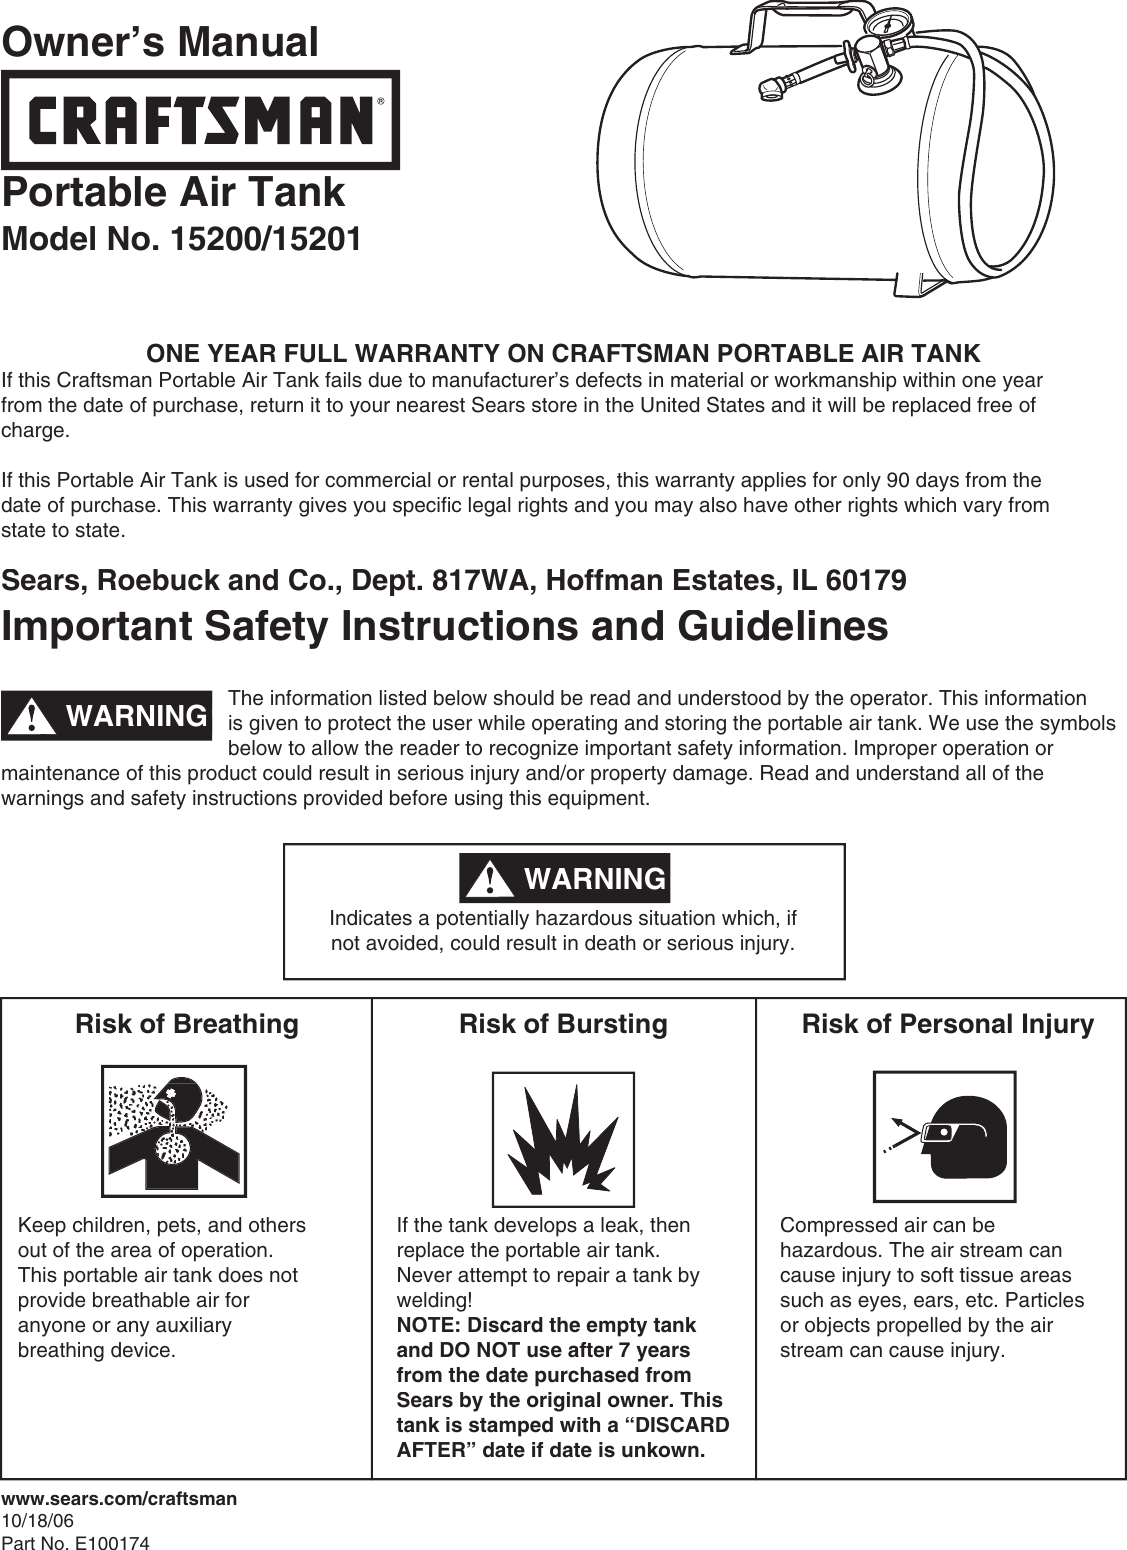 Page 1 of 2 - Craftsman Craftsman-5-Gallon-135-Psi-Horizontal-Air-Tank-Owners-Manual- 15200 Manual  Craftsman-5-gallon-135-psi-horizontal-air-tank-owners-manual